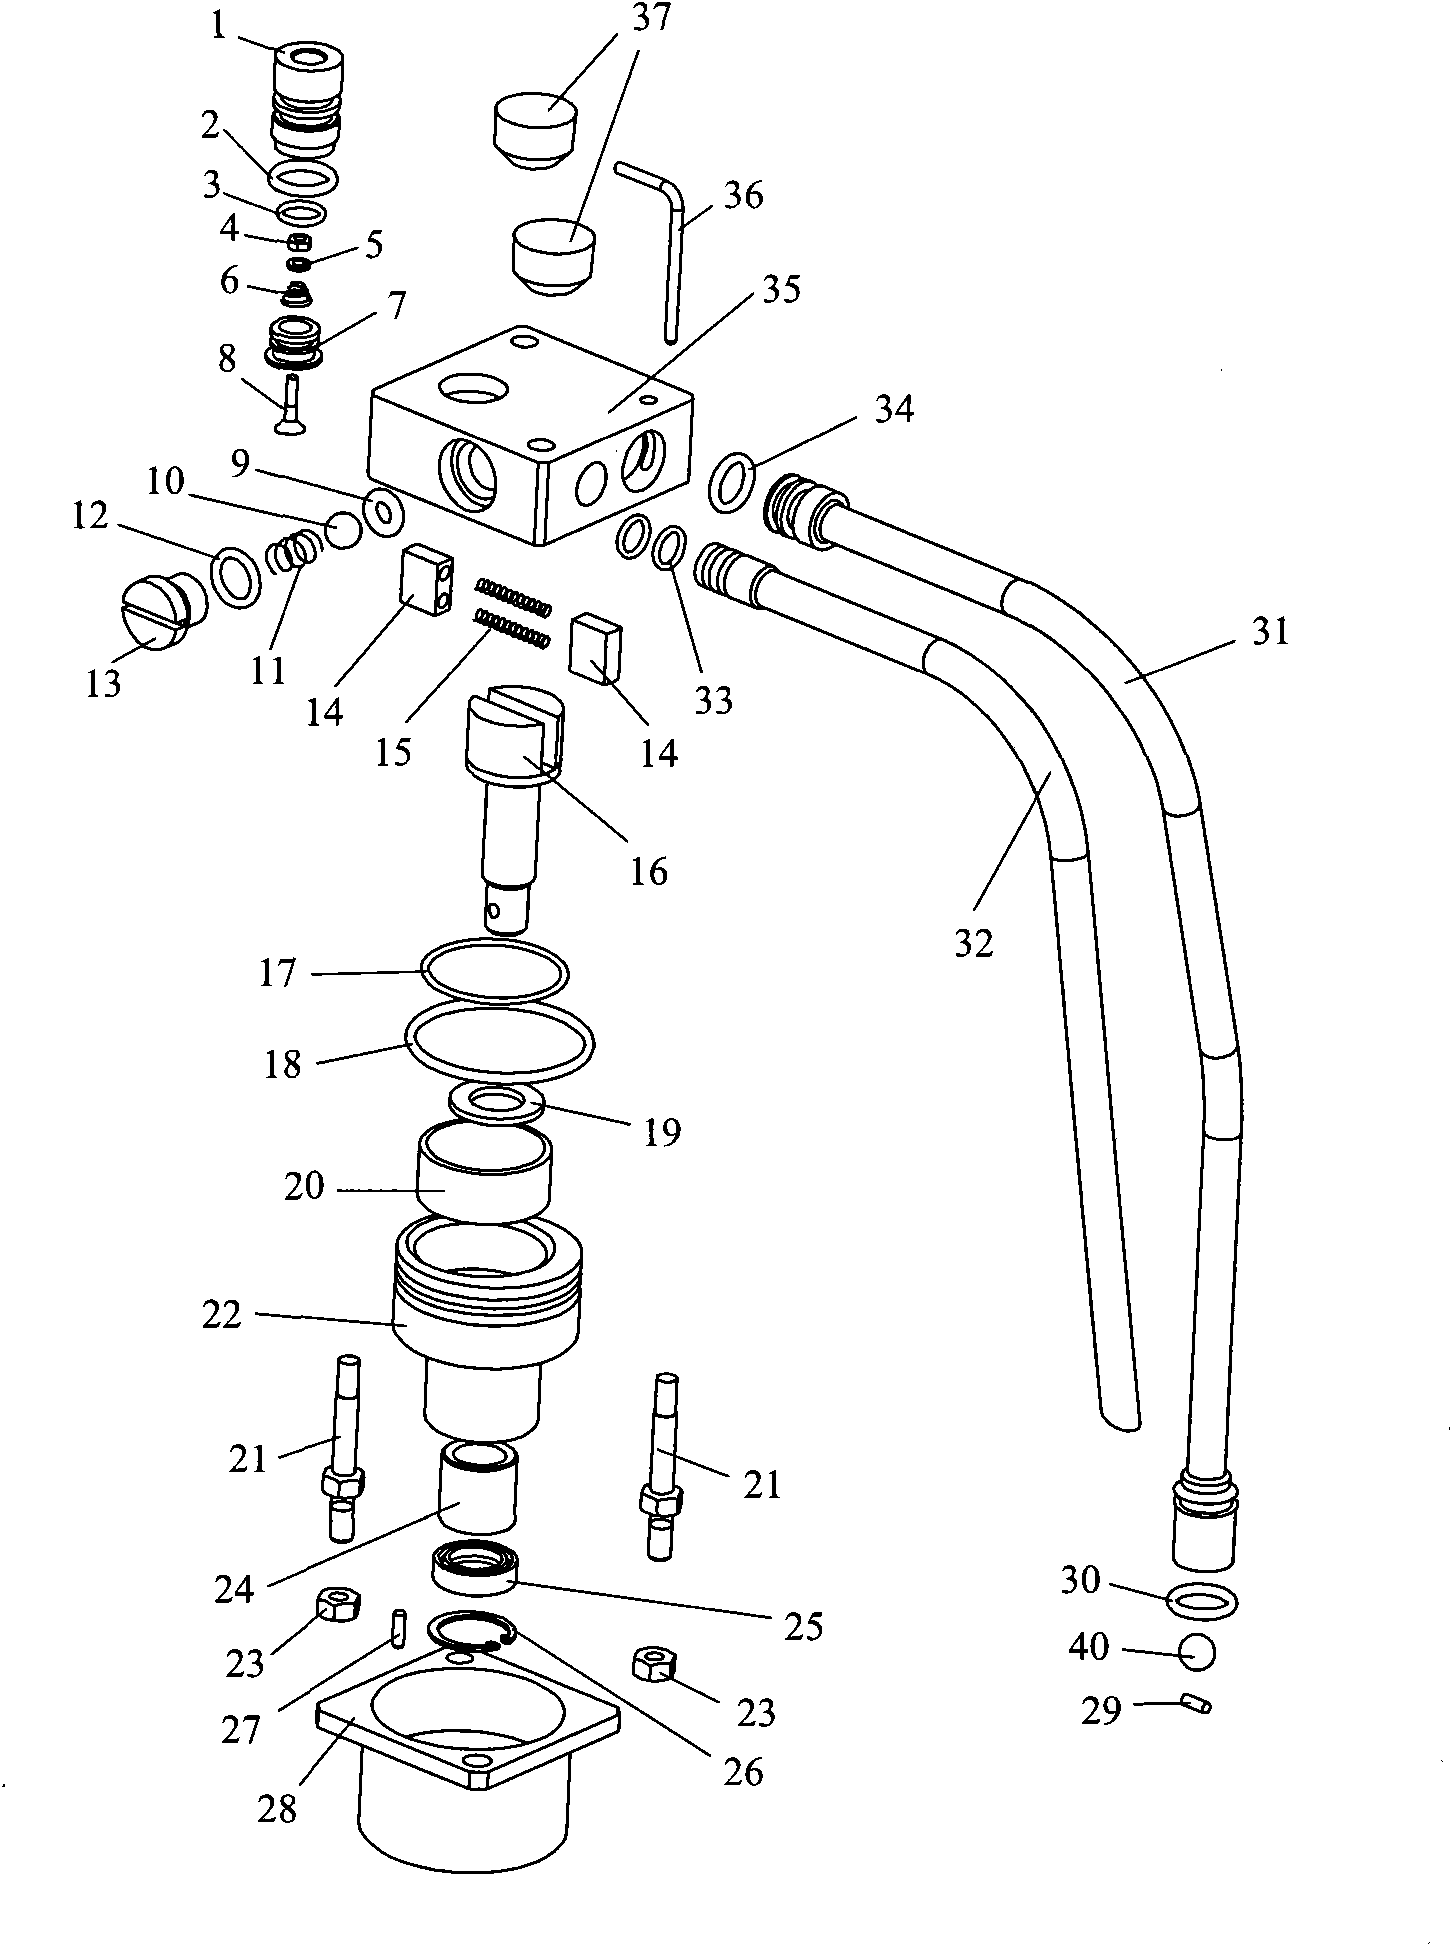 Bulking pump device of ice cream machine